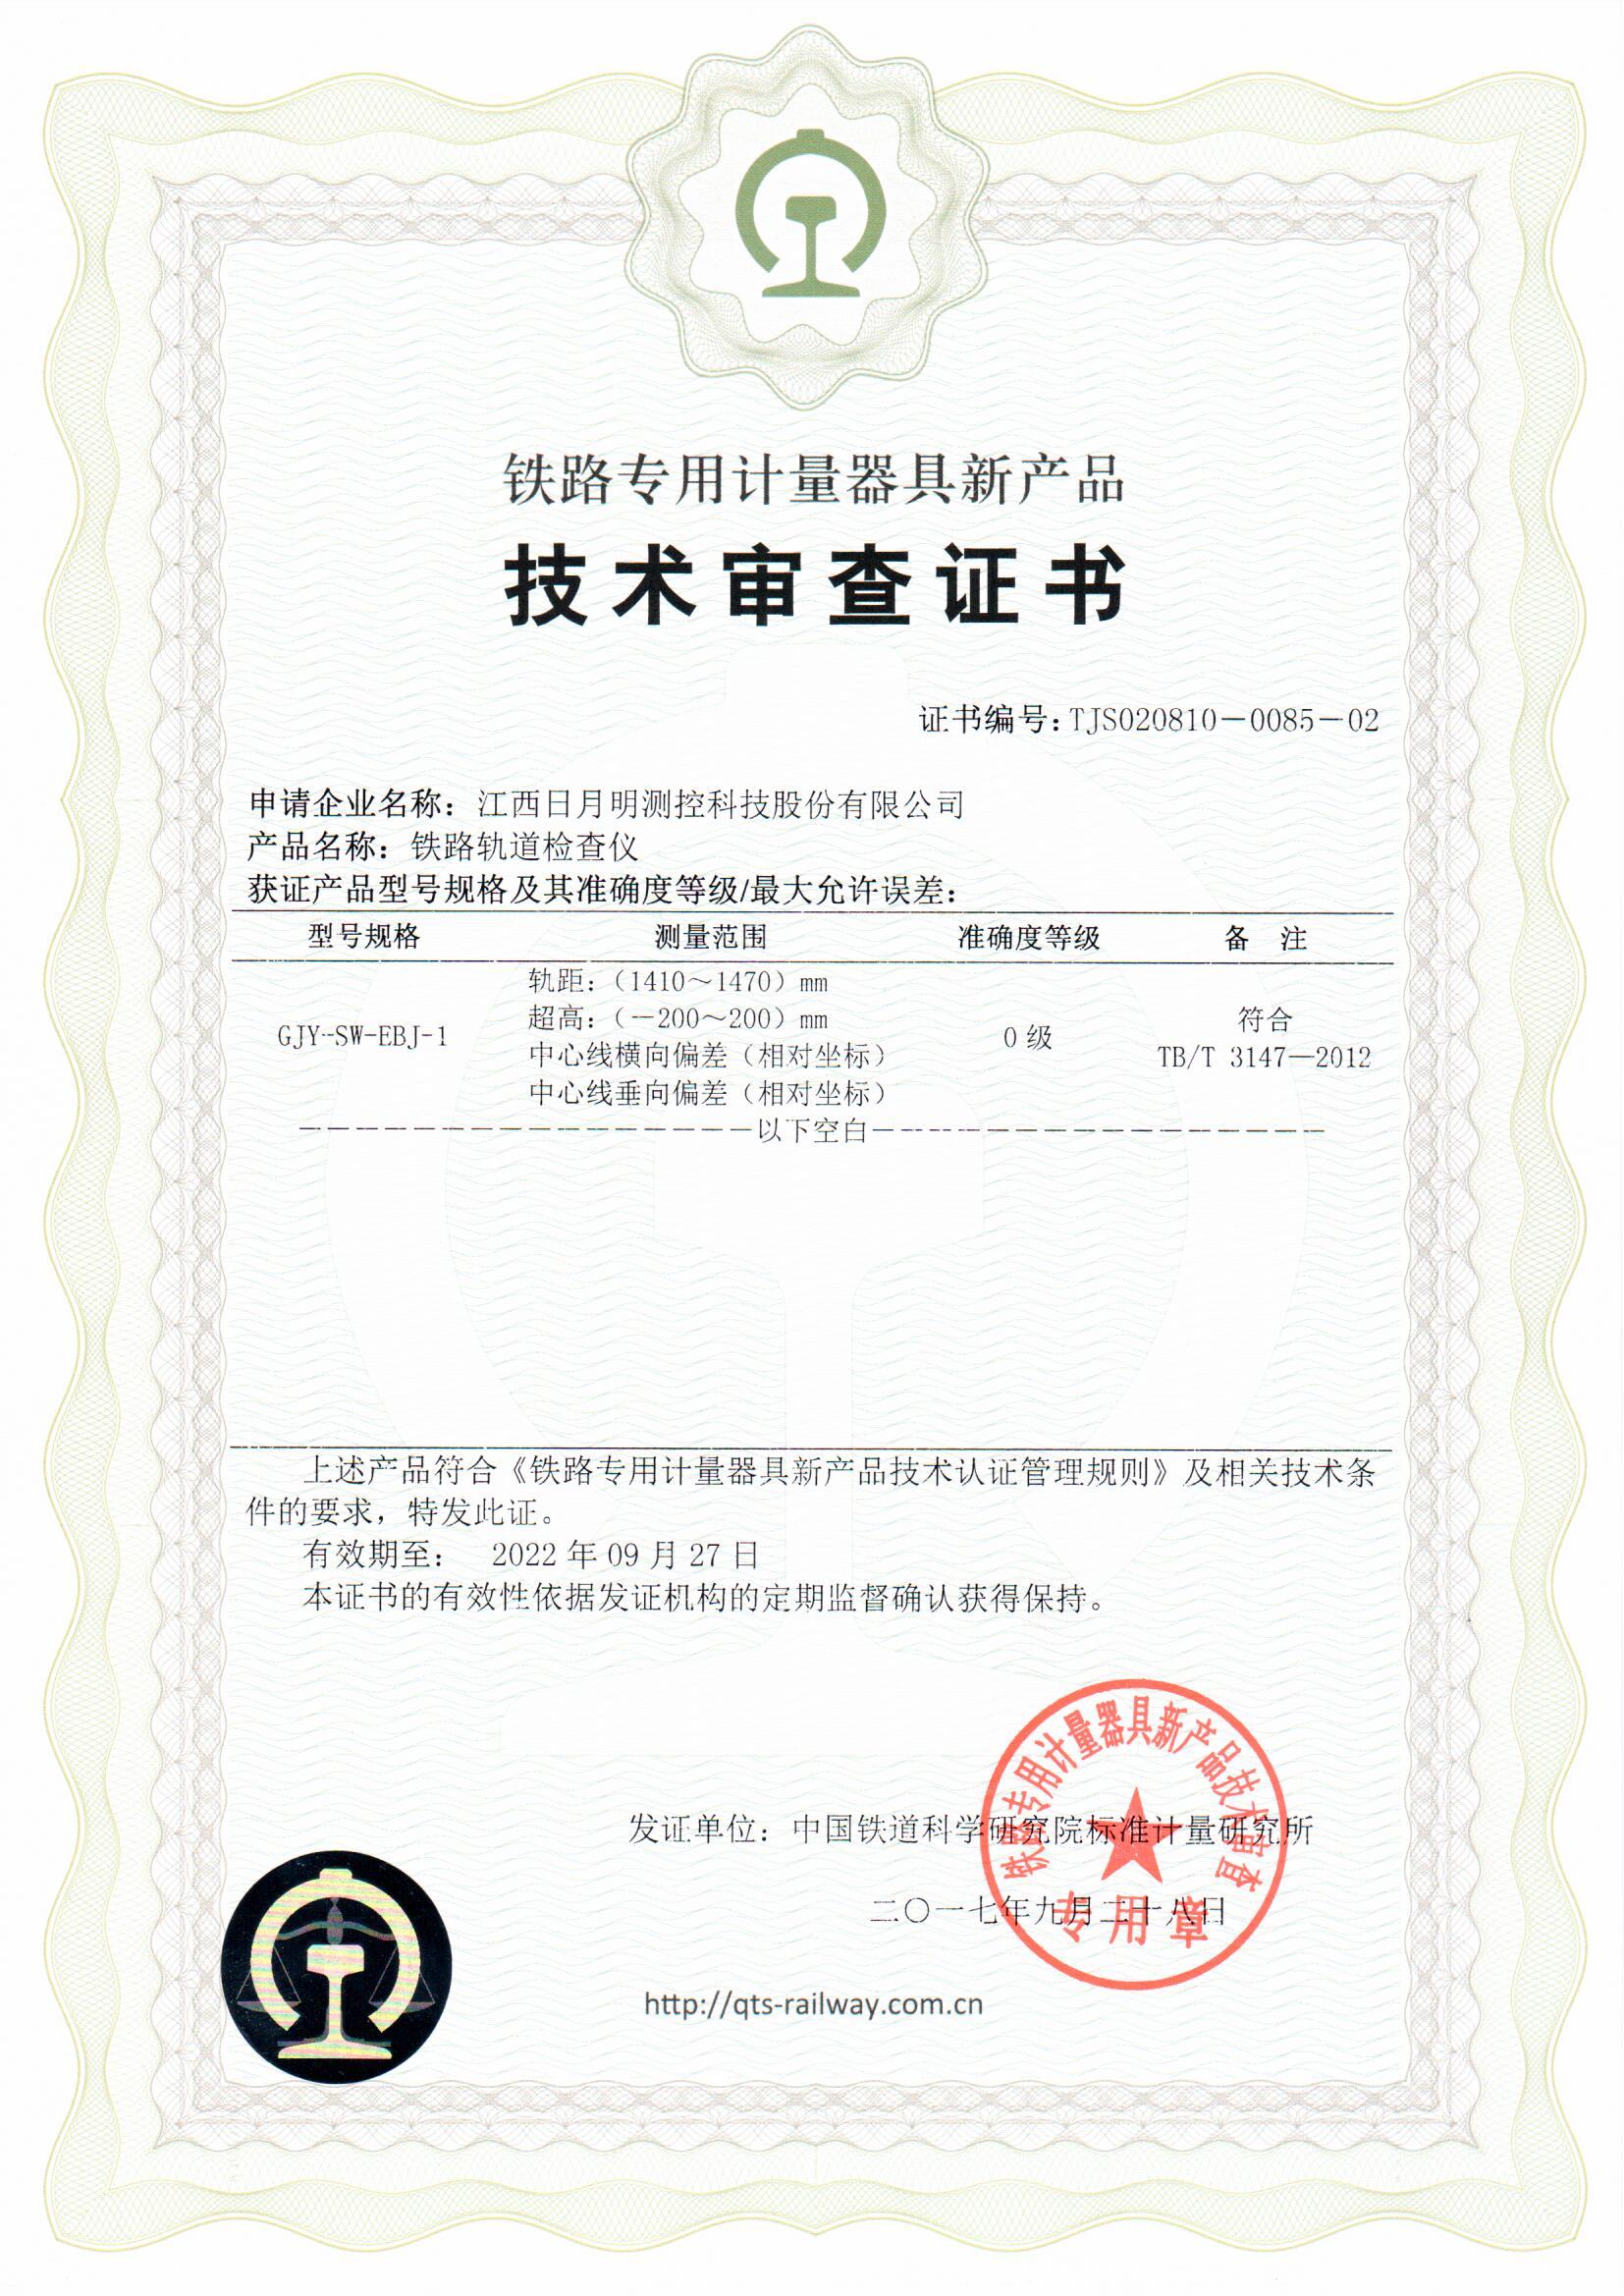 GJY-SW-EBJ-1技术审查证书